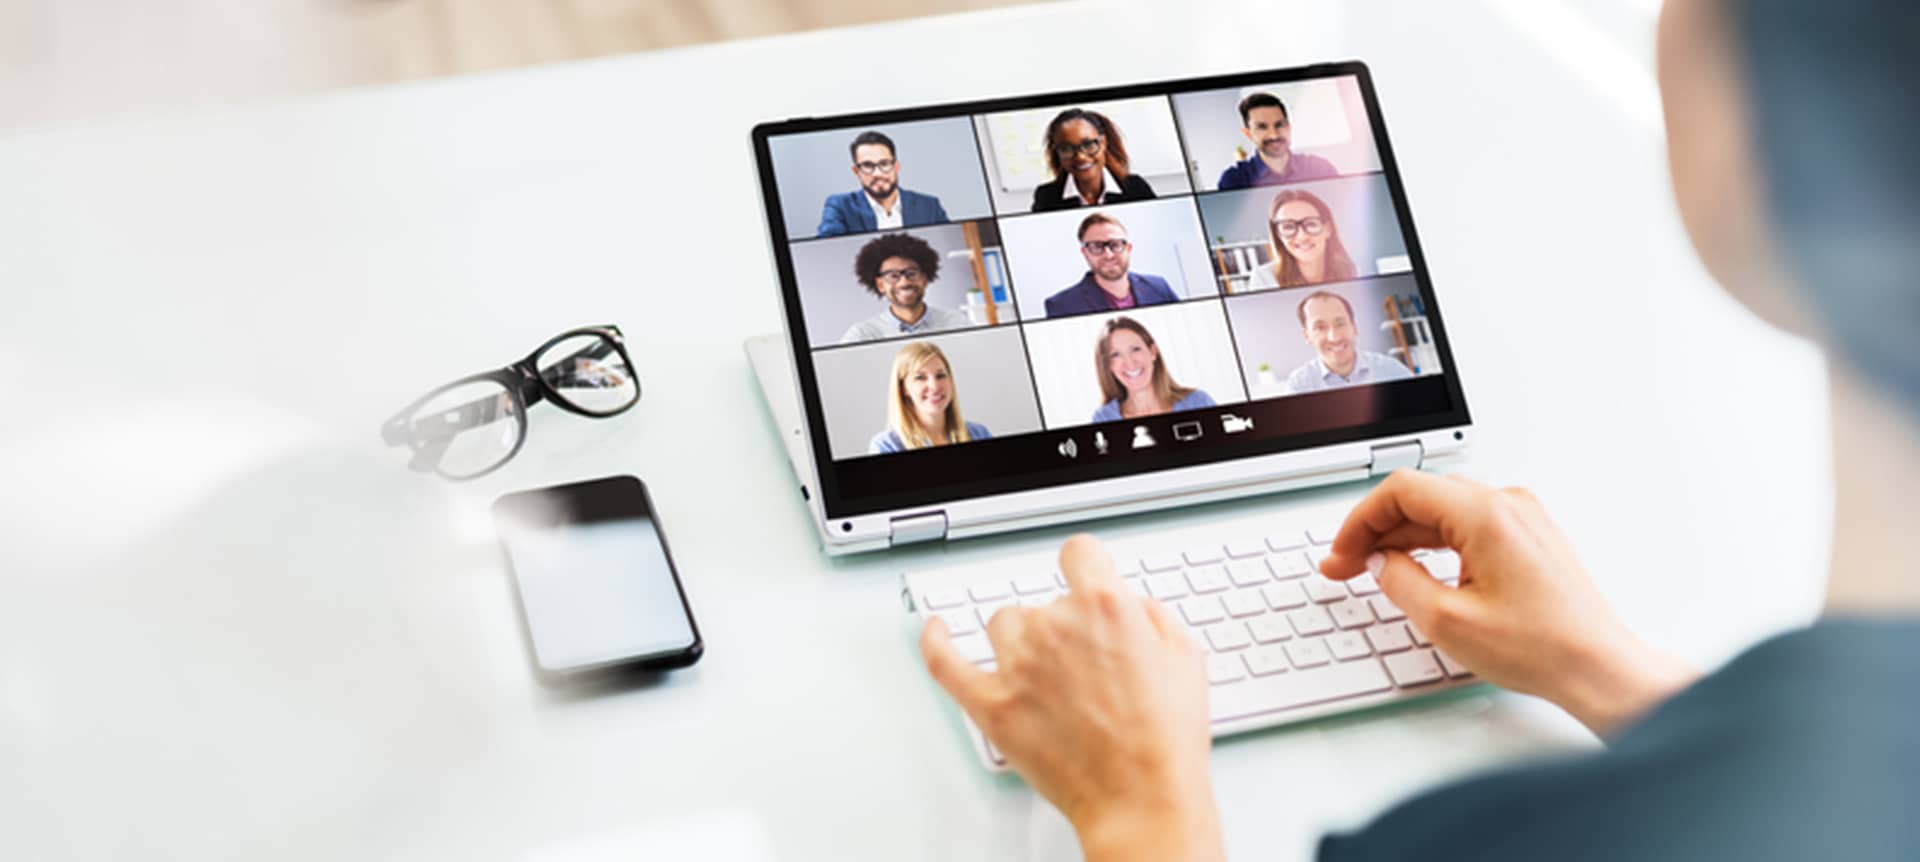 An HR team using video assessment interviews to conduct a team interview